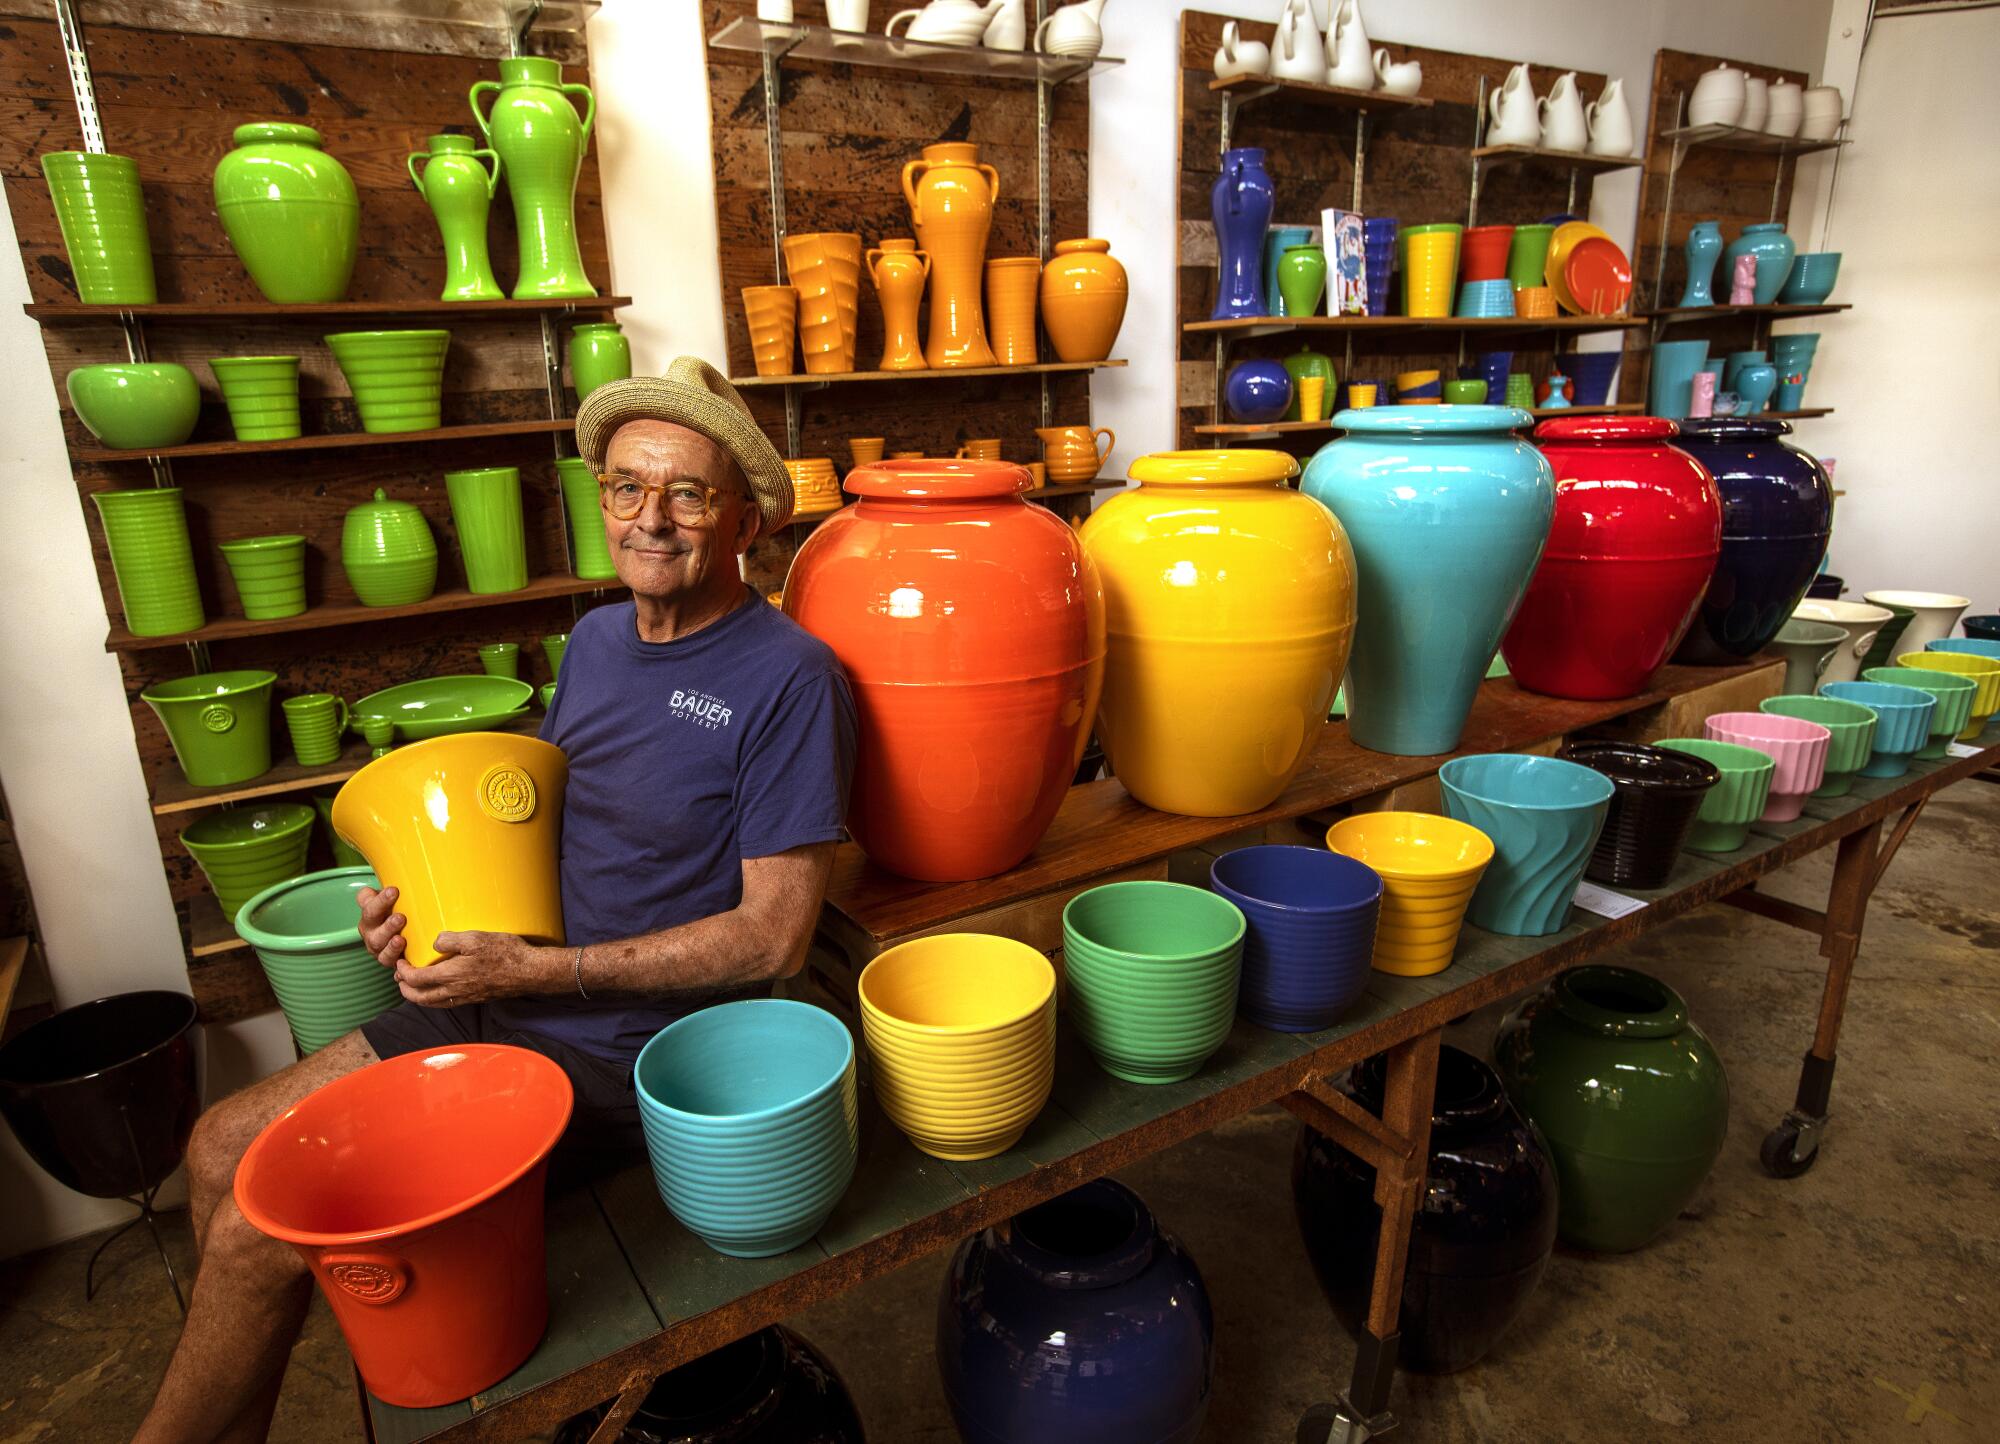 Janek Boniecki is photographed in his showroom among colorful pots